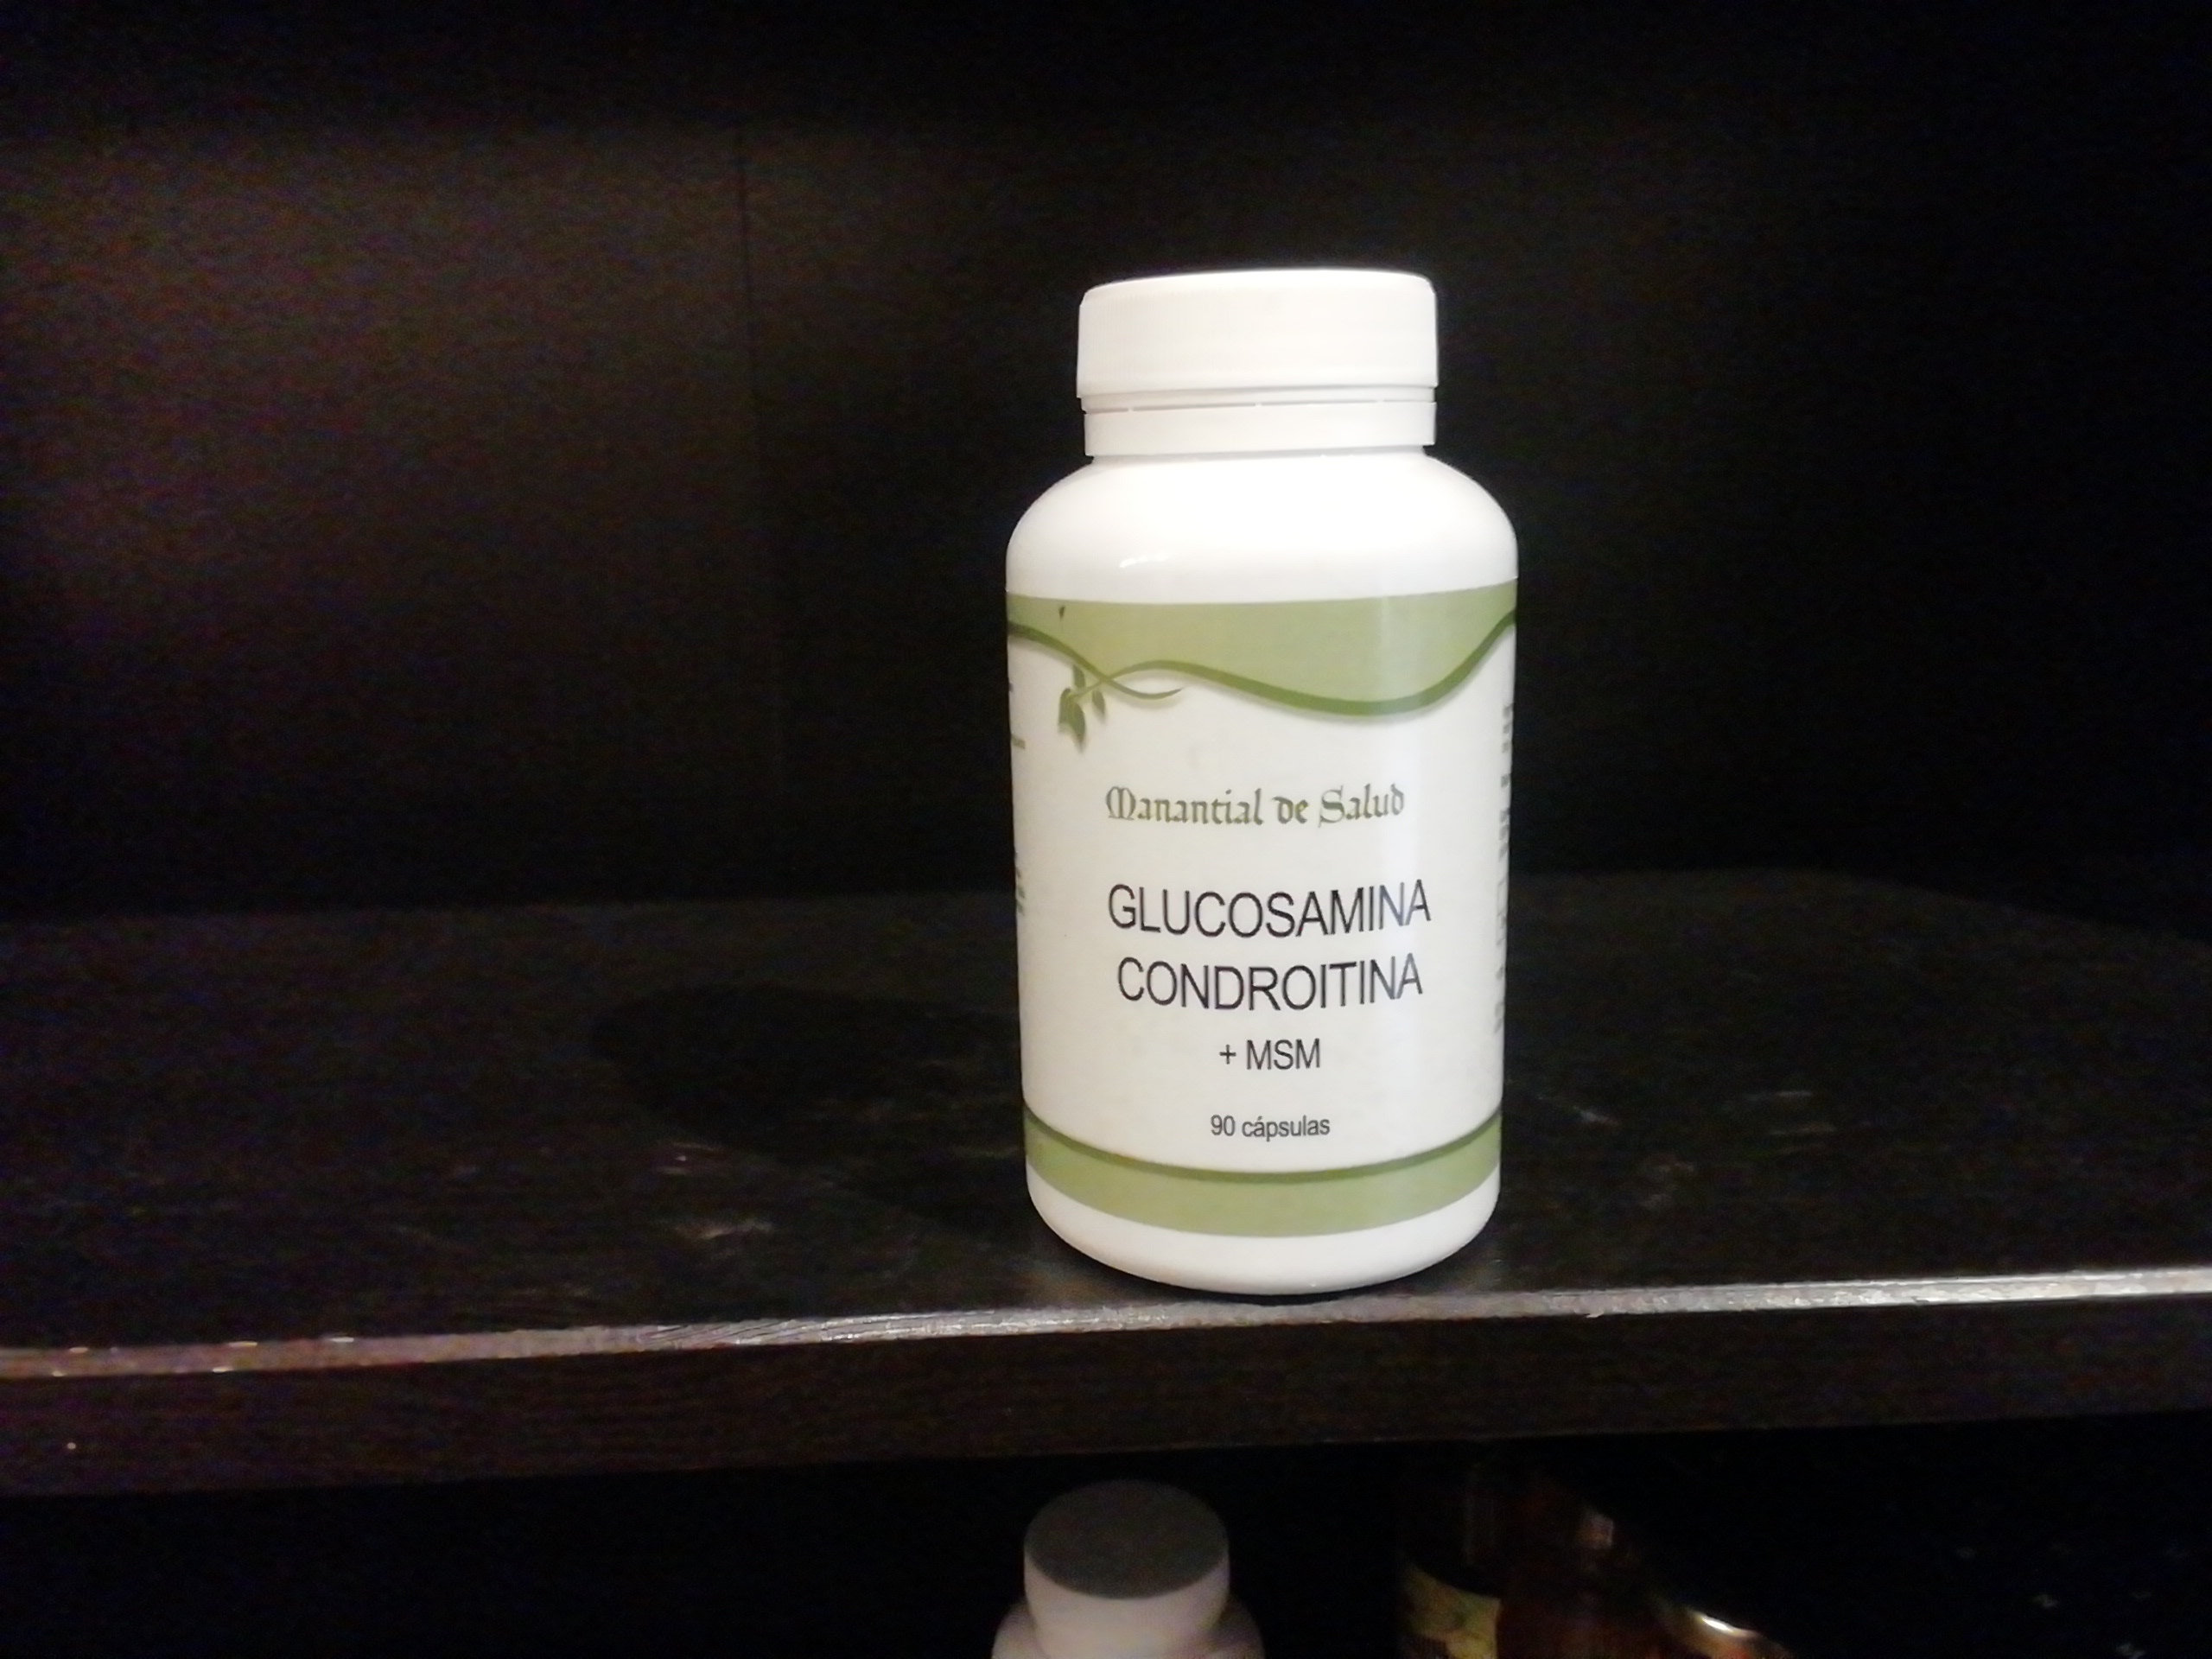 Glucosamina i condroitina 90caps Manantial de salud 